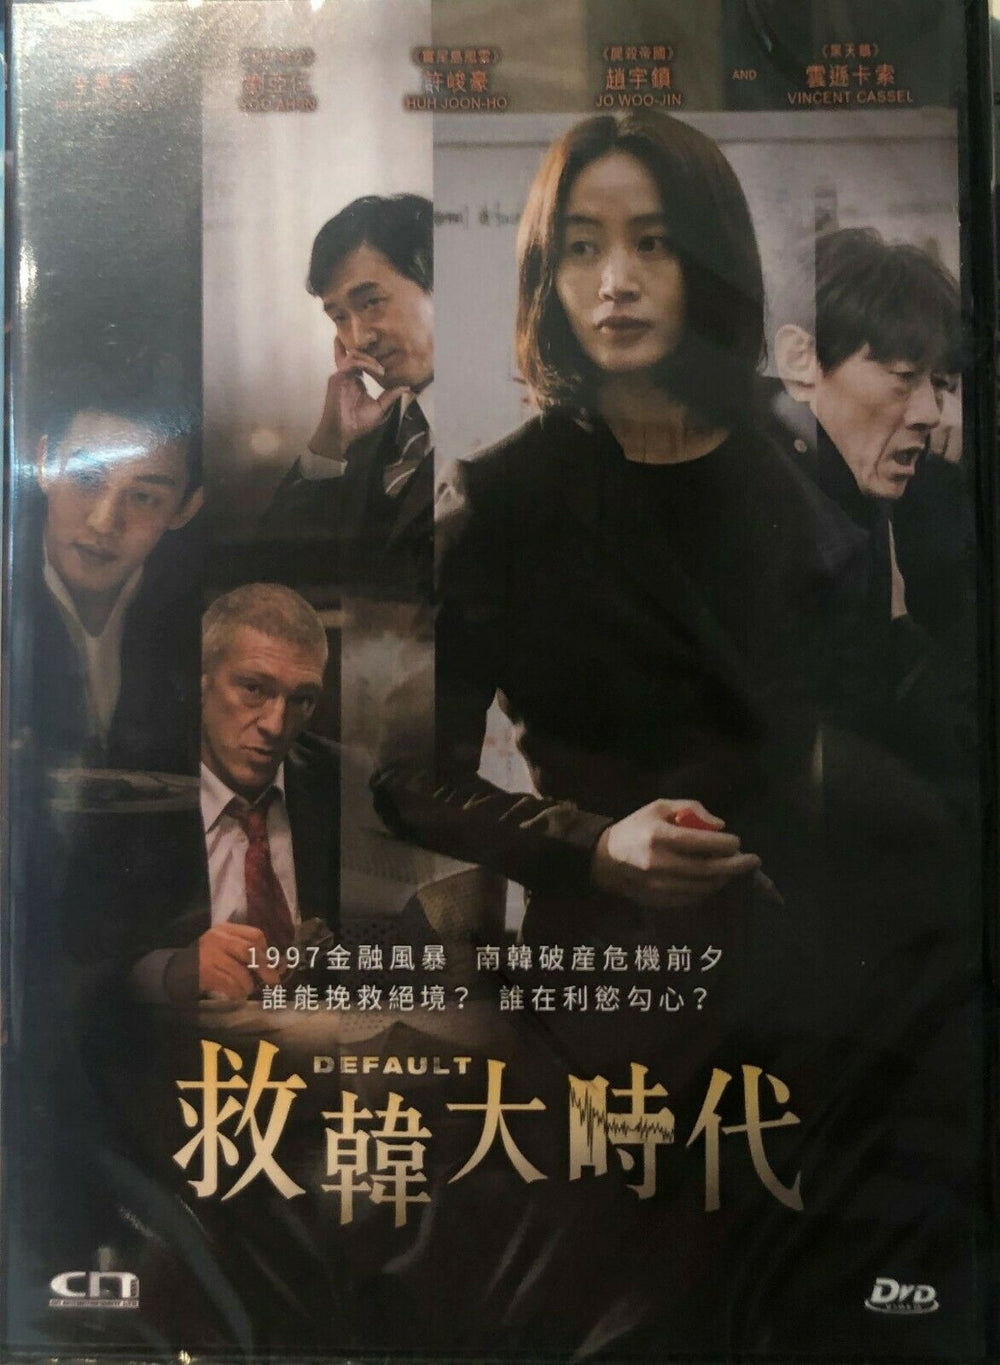 DEFAULT 救韓大時代 2018 (Korean Movie) DVD ENGLISH SUBTITLES (REGION FREE)